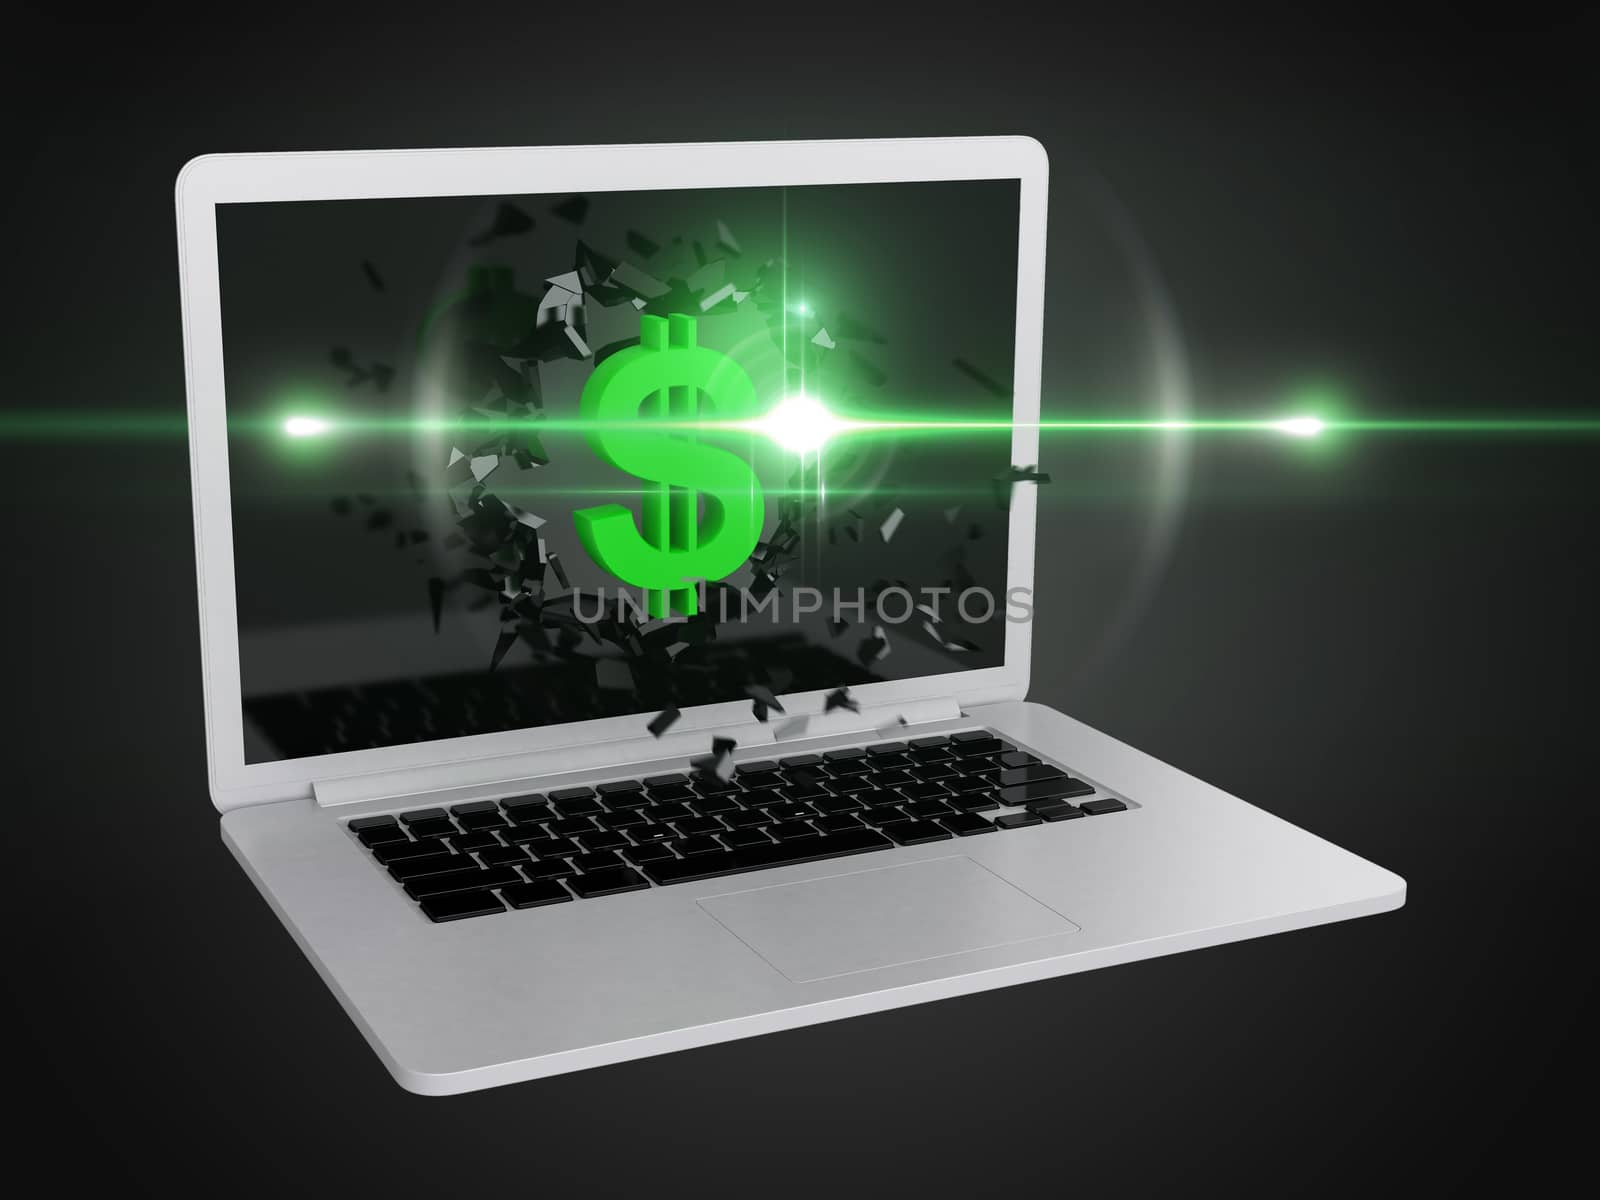 Green dollar sign destroy laptop by teerawit